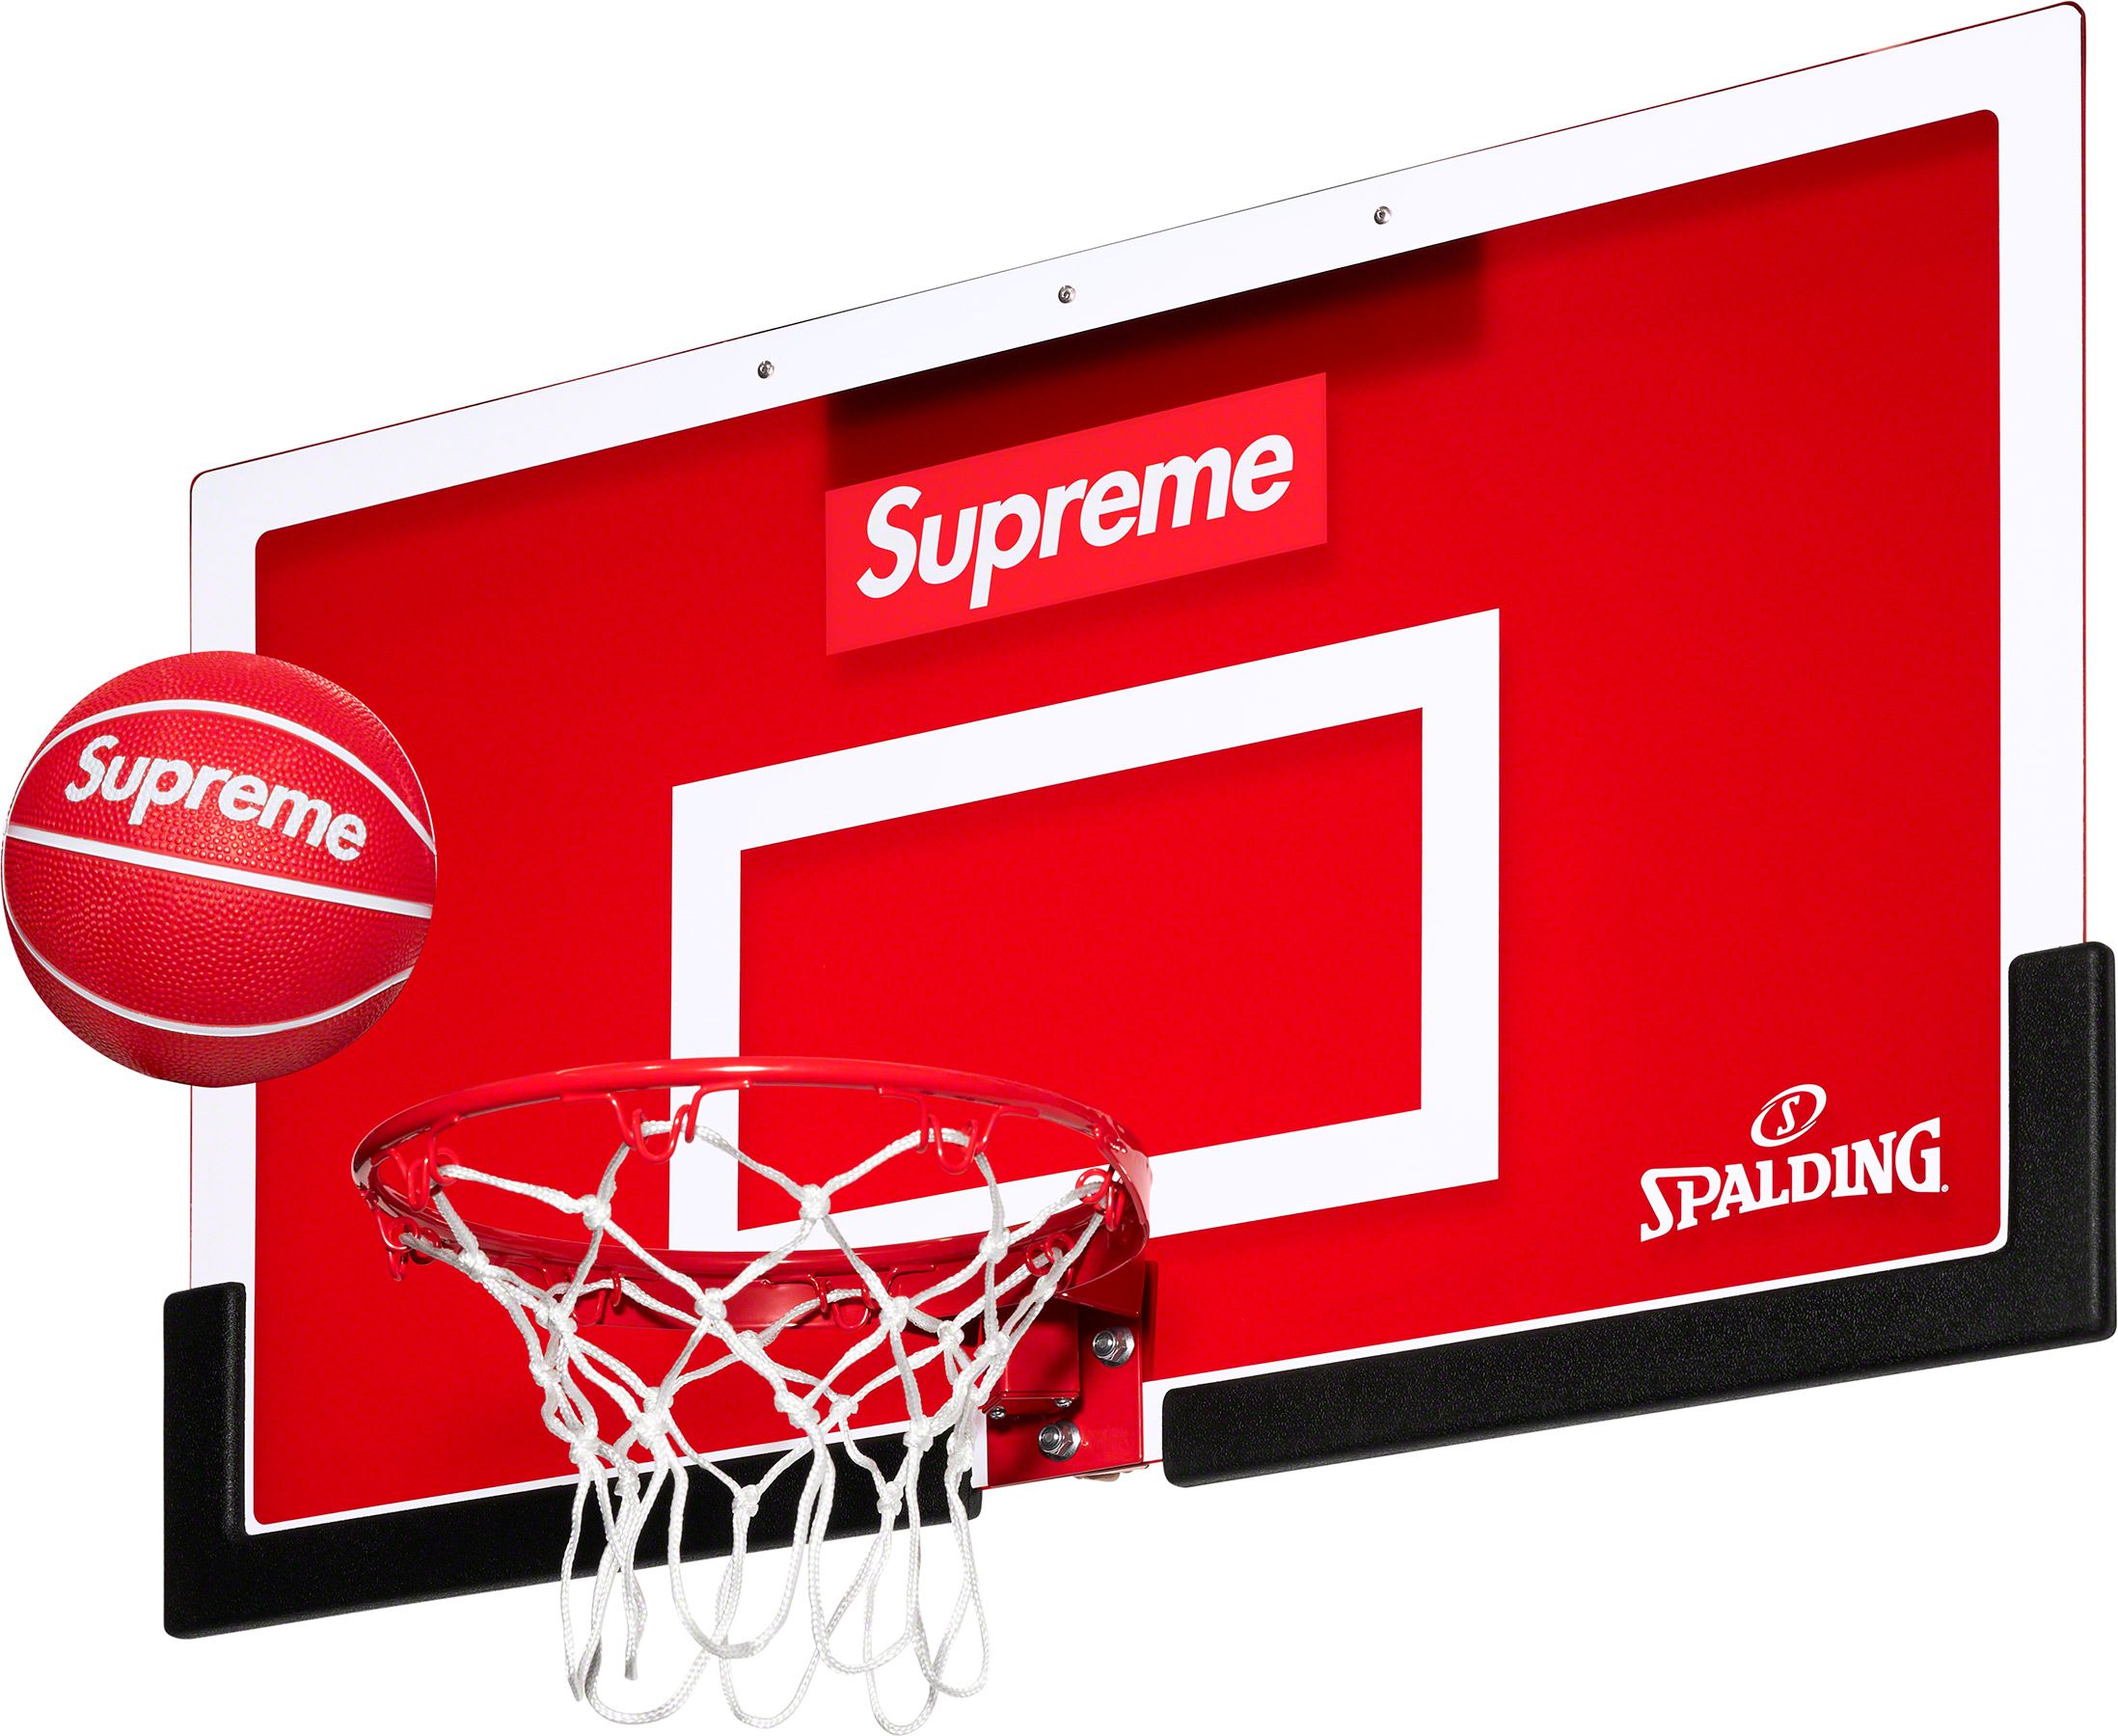 NBASupreme シュプリーム バスケットゴール スポルティング バスケ 新品新作